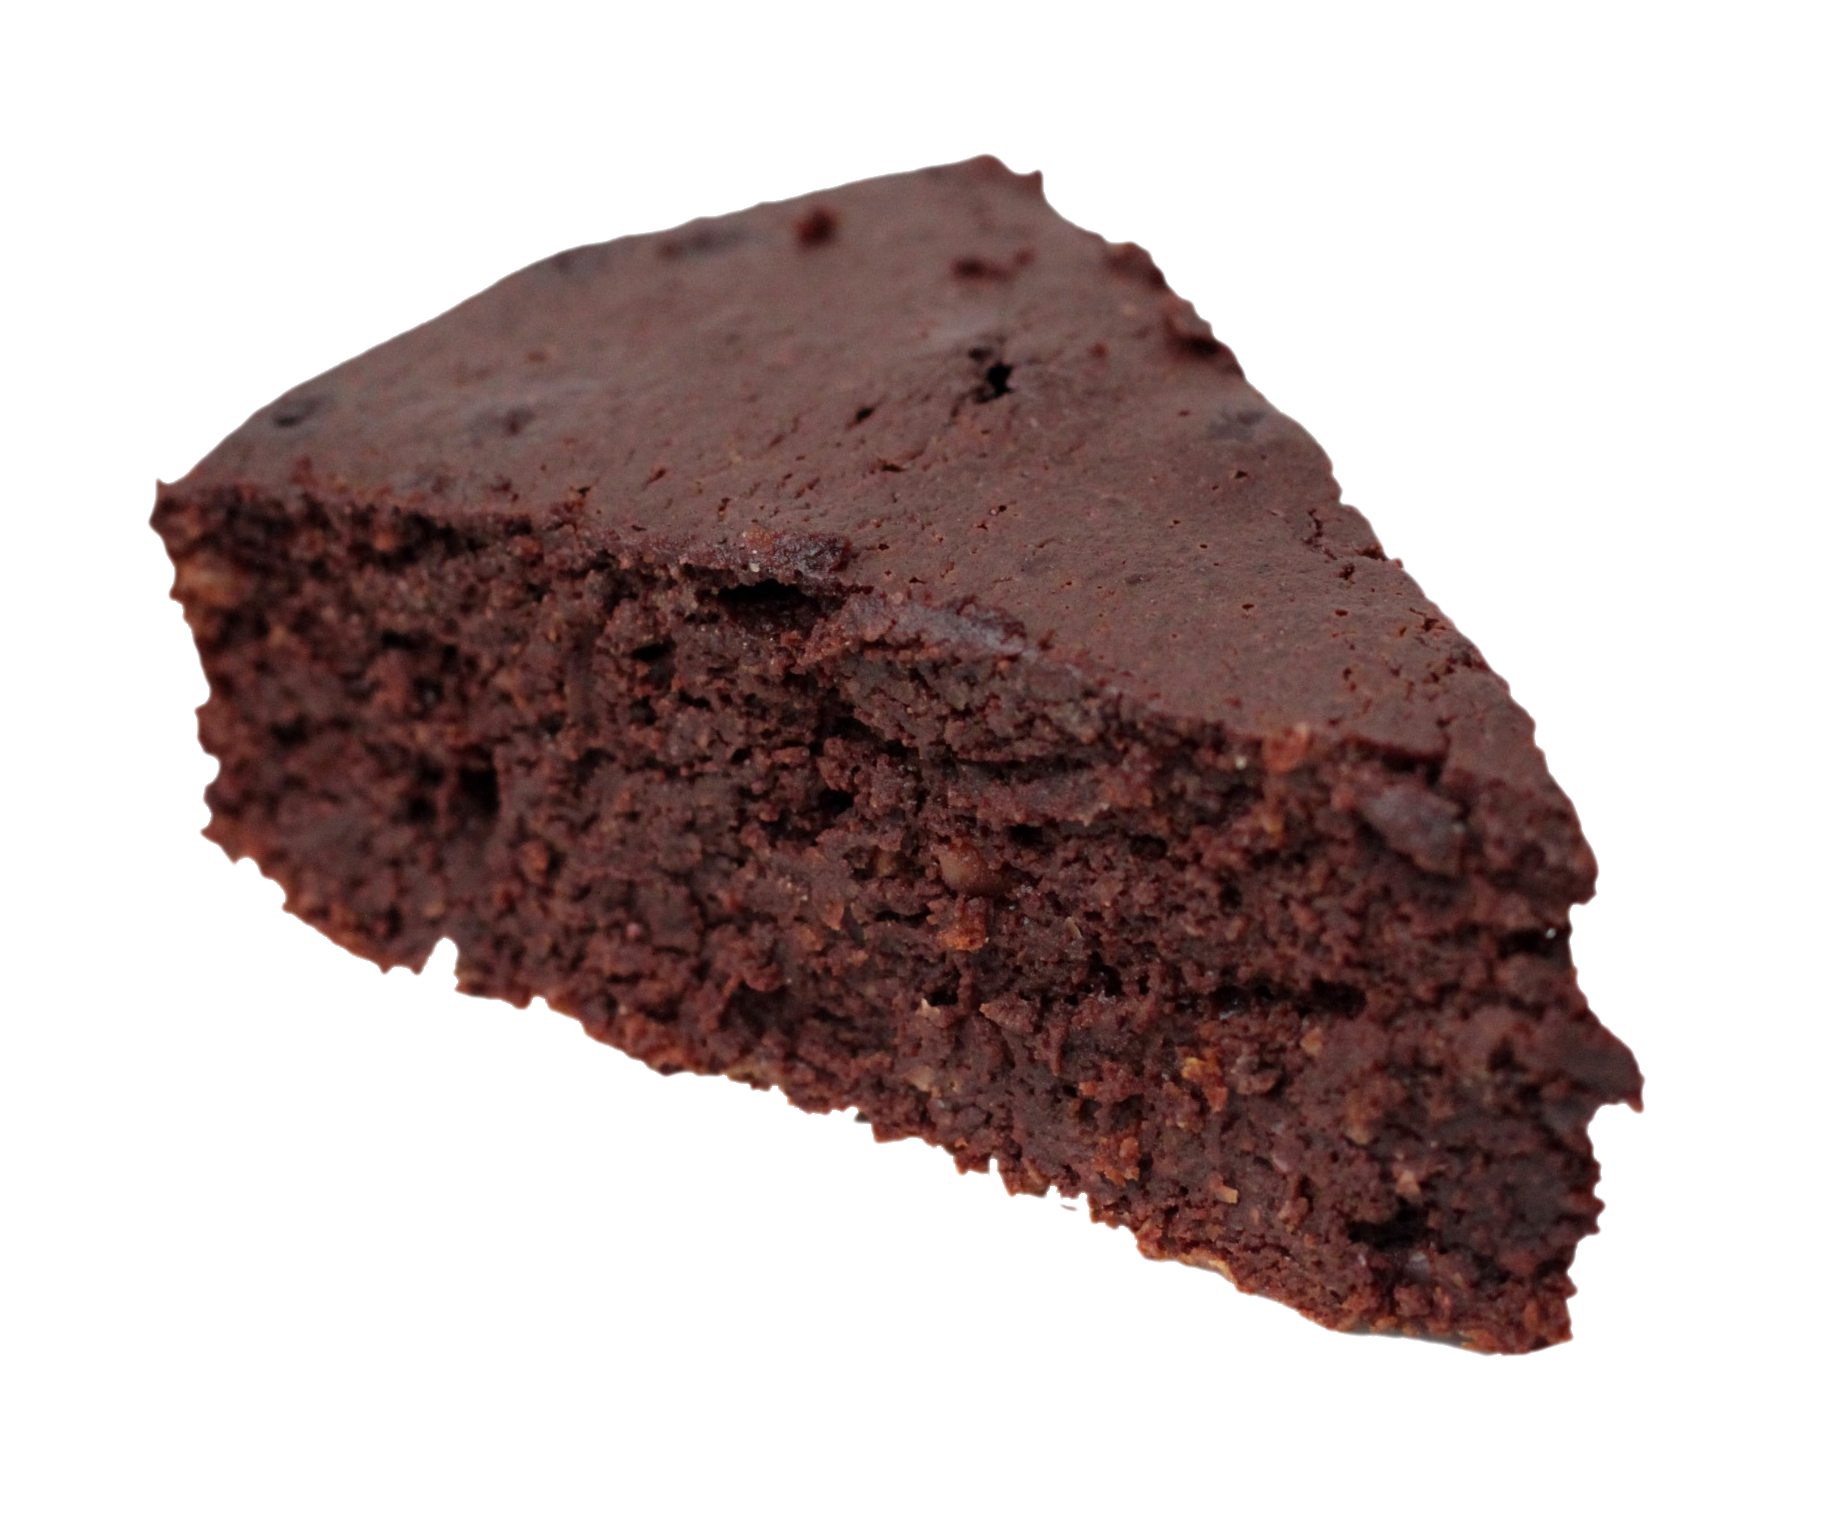 Cake Piece Chocolate HQ Image Free PNG Image